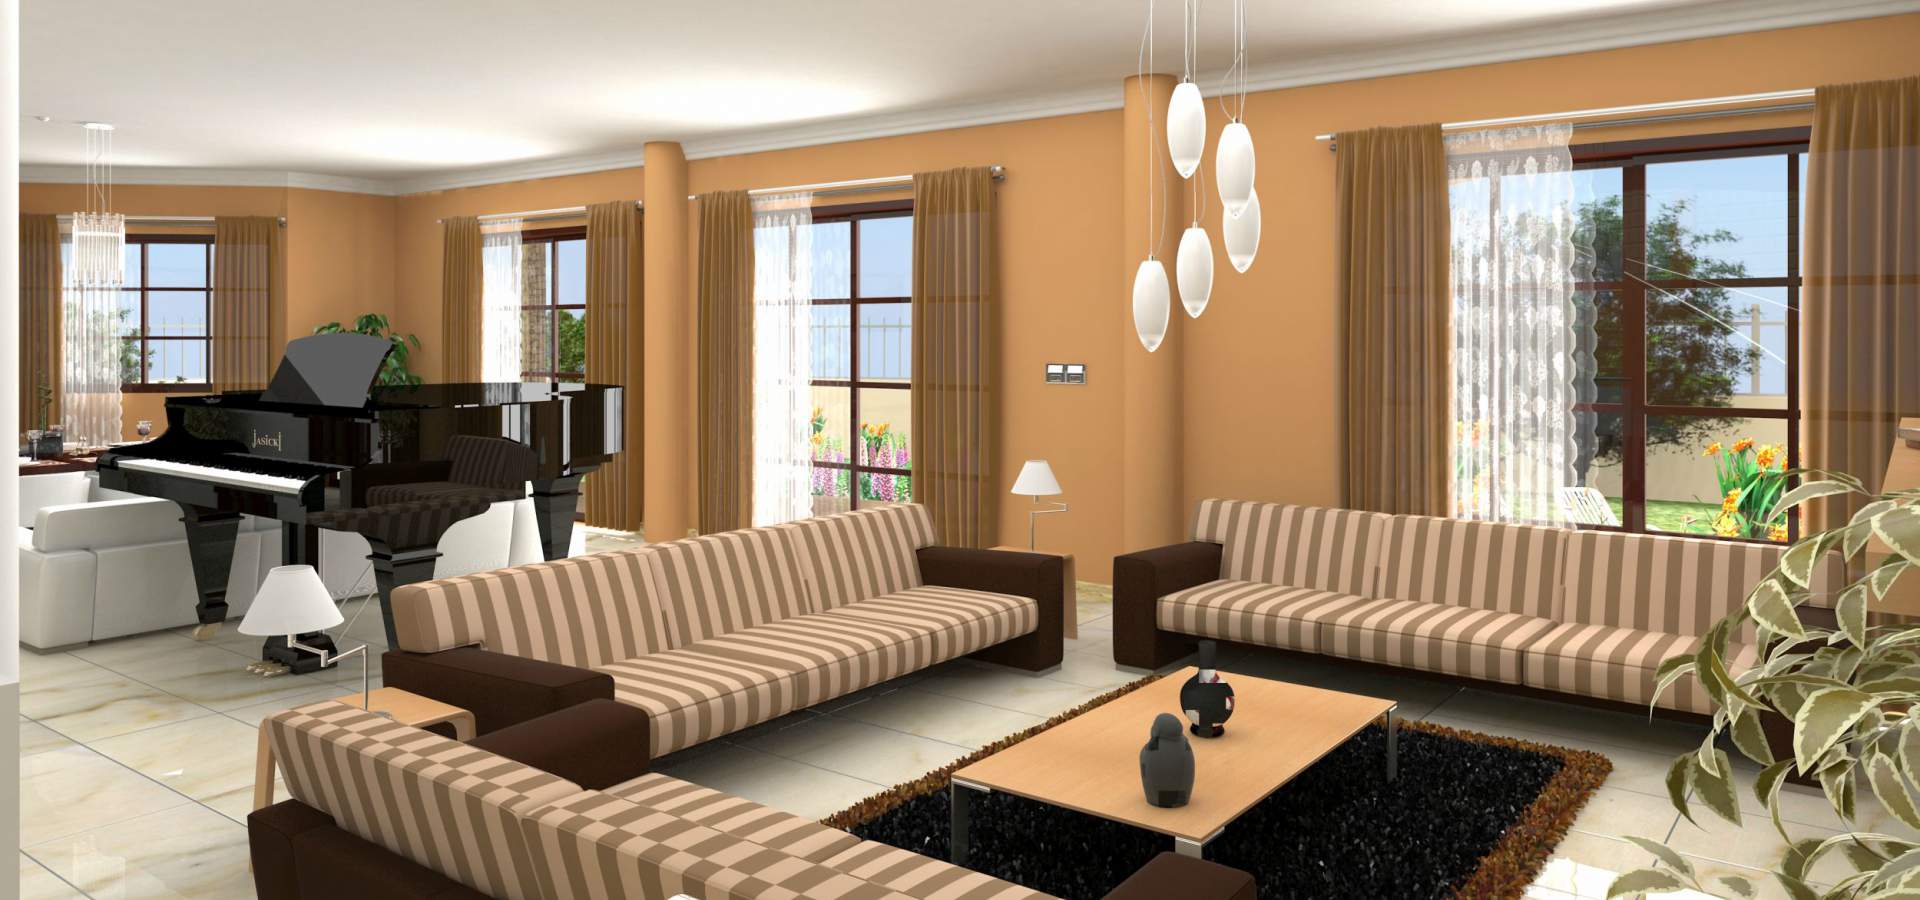 Konia Luxury Houses Interior Design